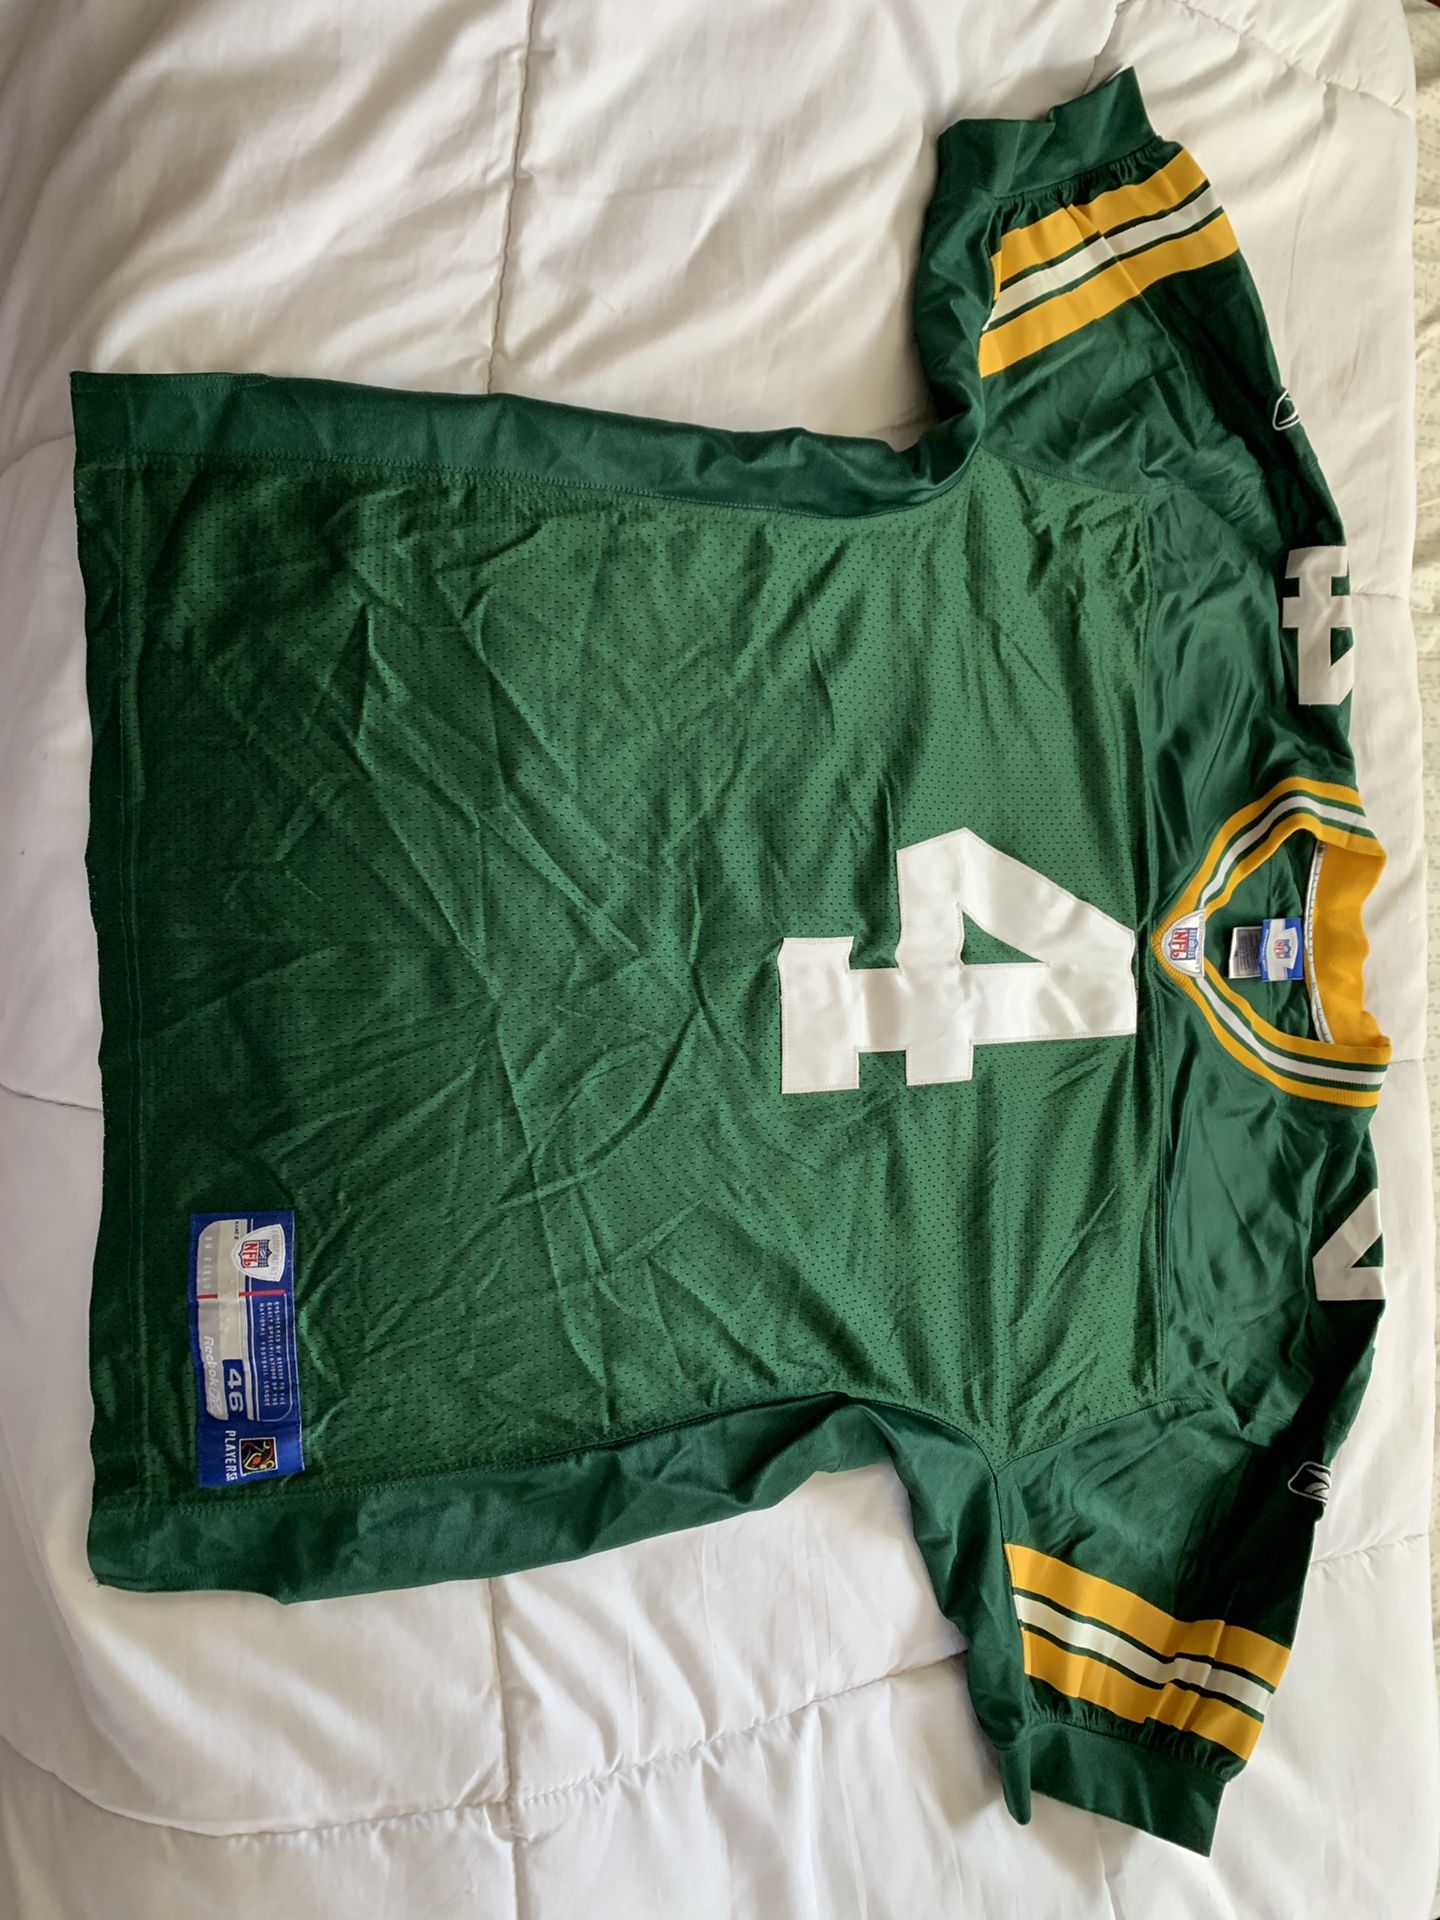 Authentic Reebok Brett Favre Green Bay Packers Jersey (Size 46/Medium)